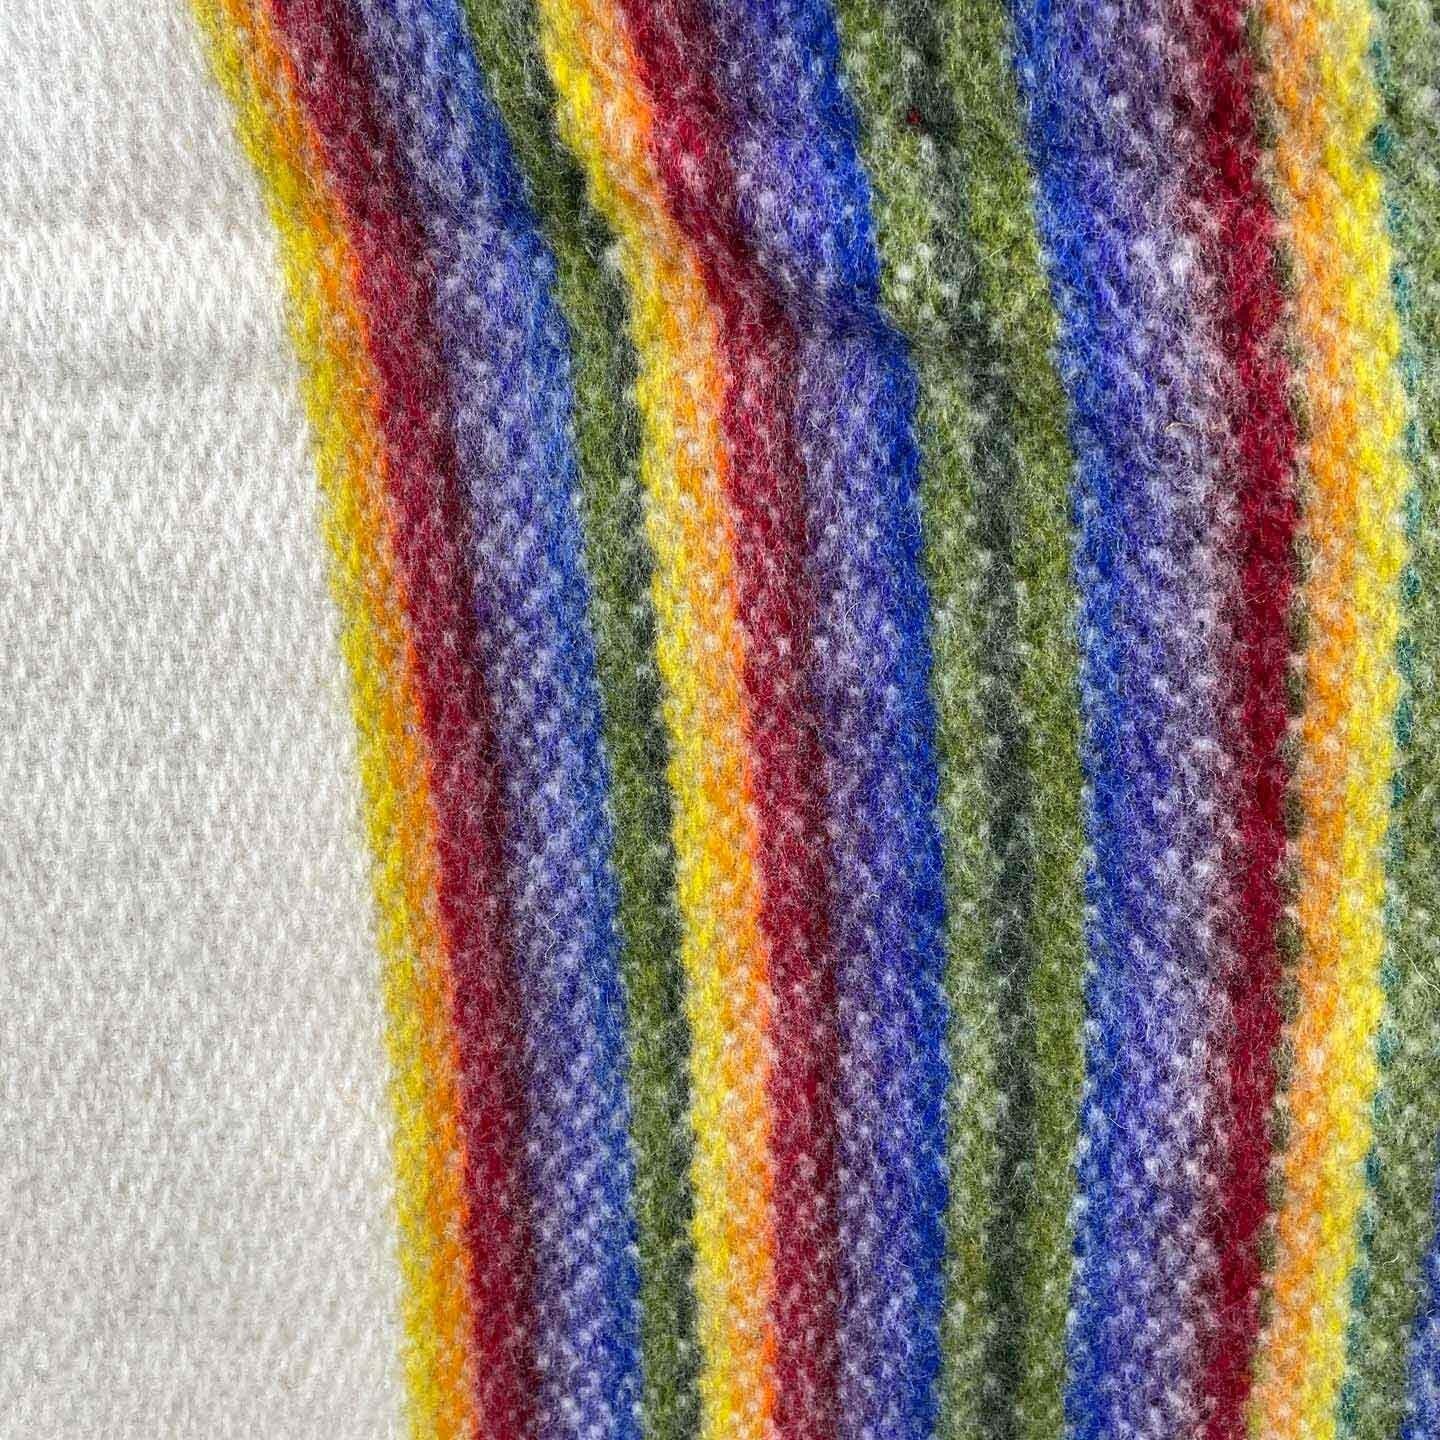 White Rainbow Hooded Wool Poncho